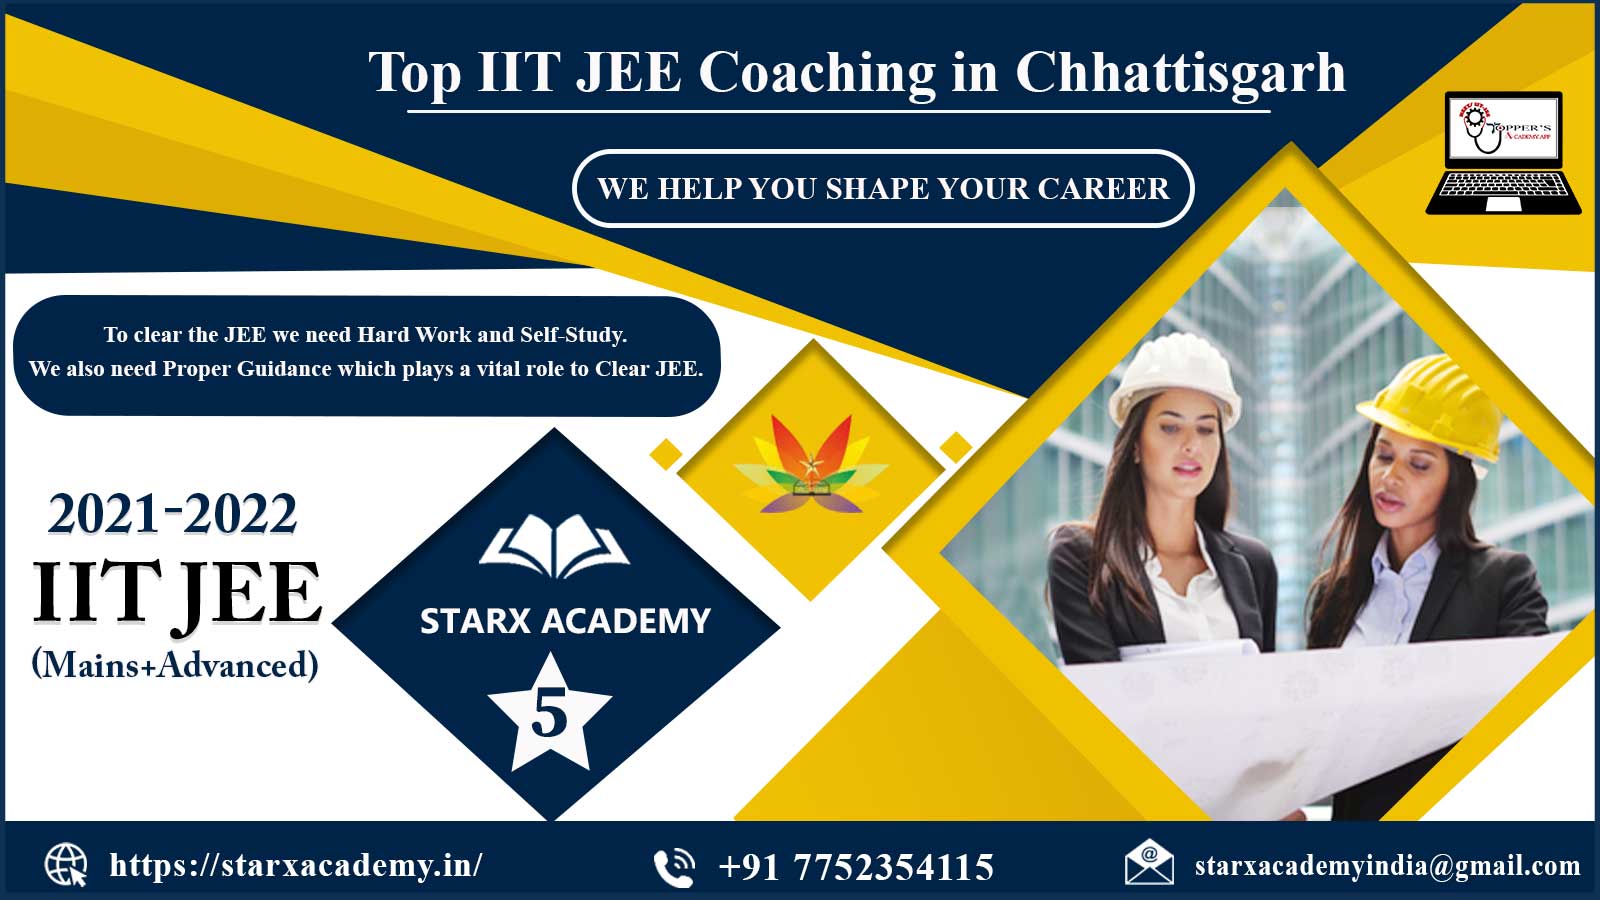 Starx Academy IIT JEE Coaching in Chhattisgarh